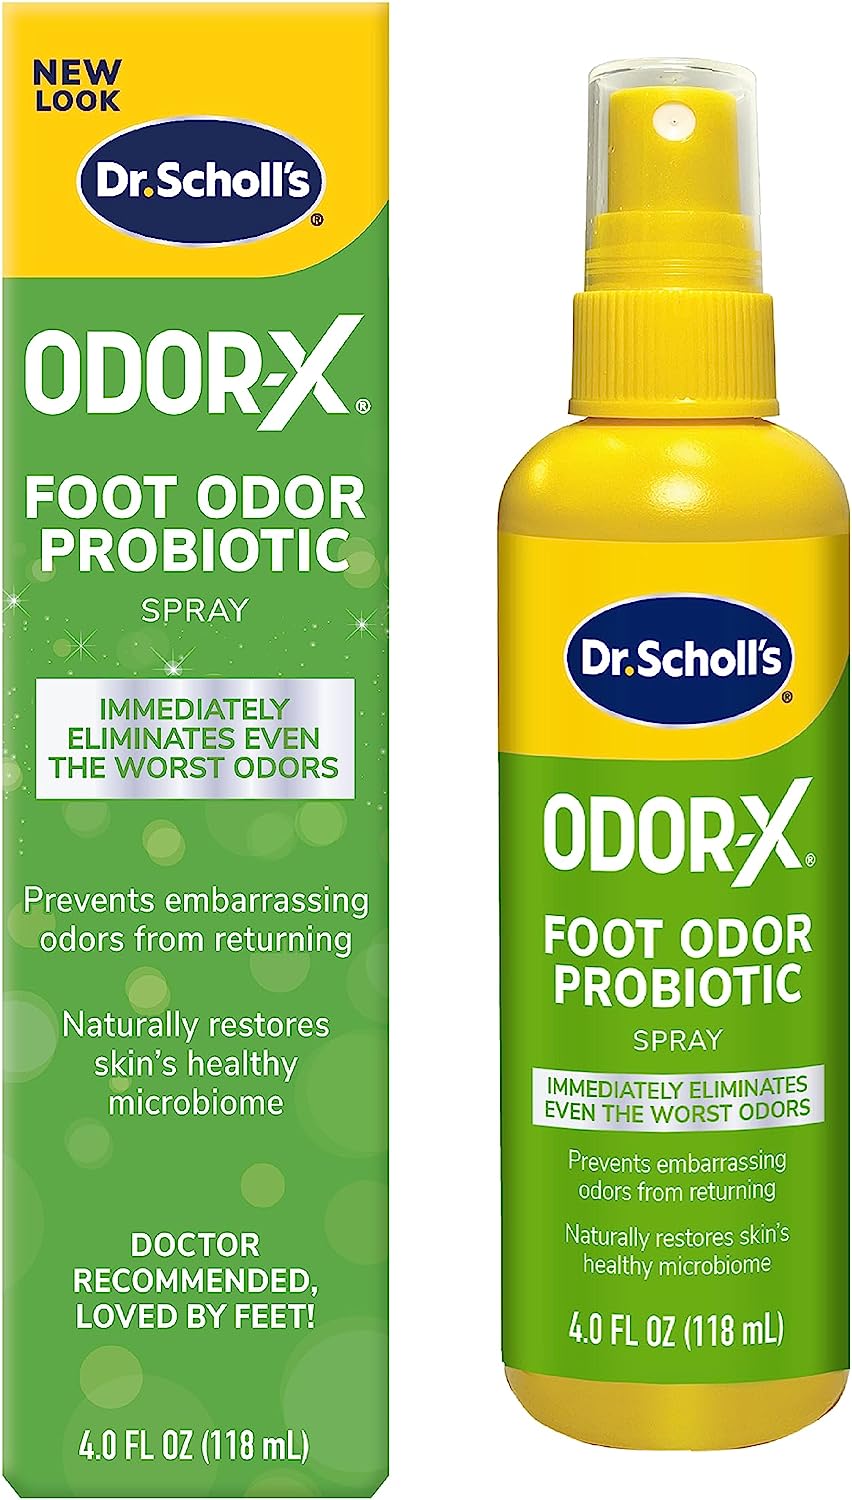 shoe deodorant product comparison